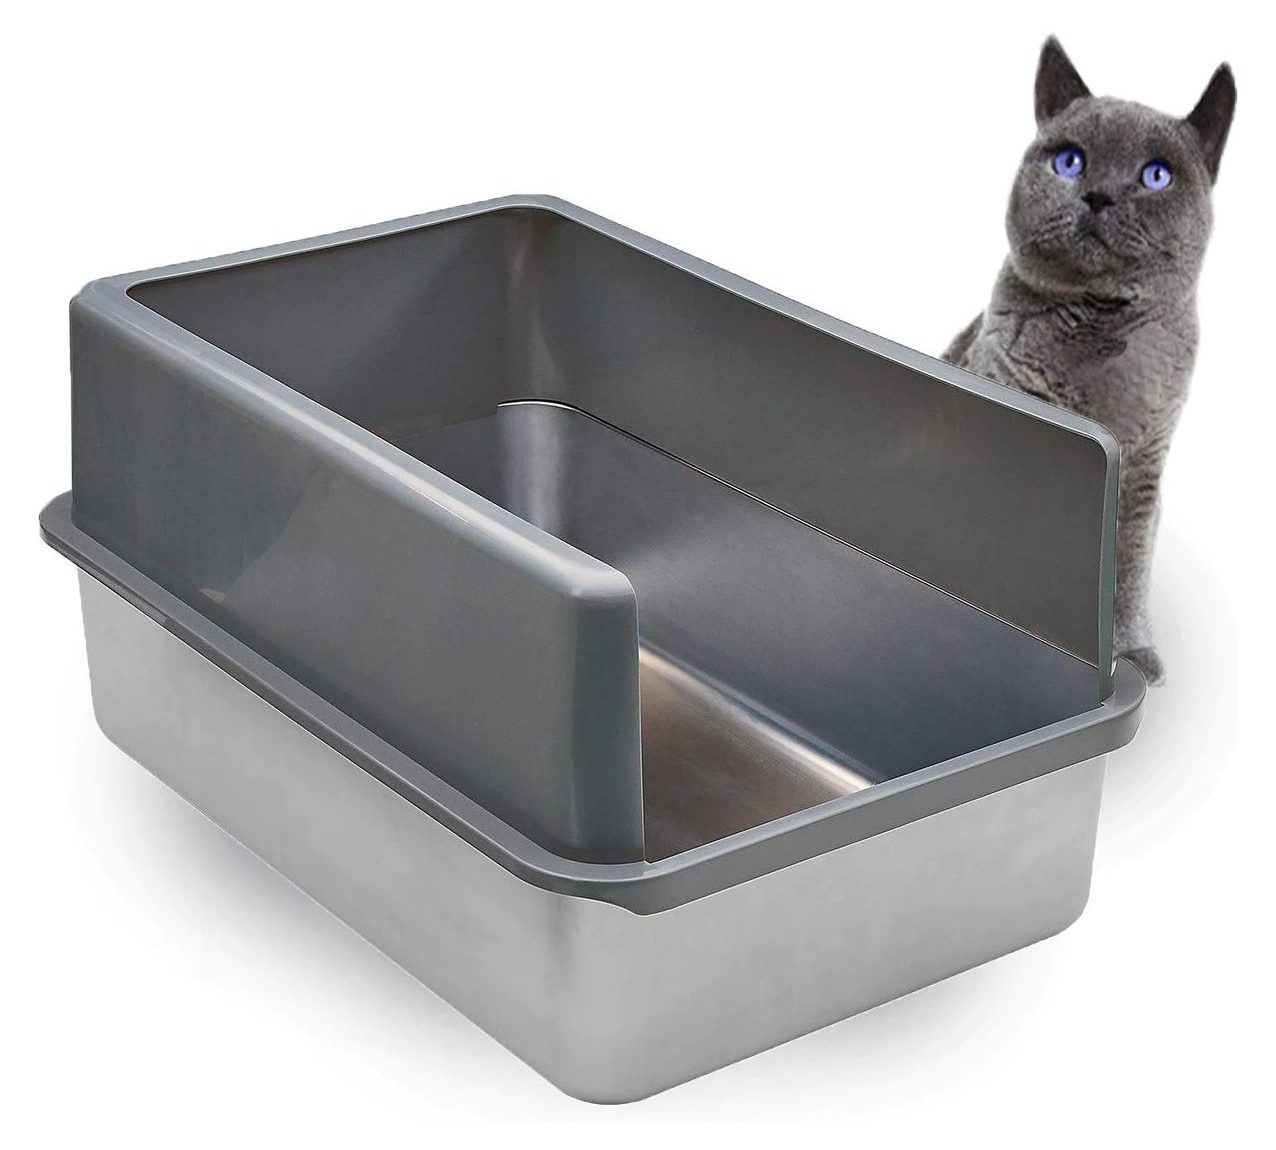 iPrimio Stainless Steel Cat Litter Box